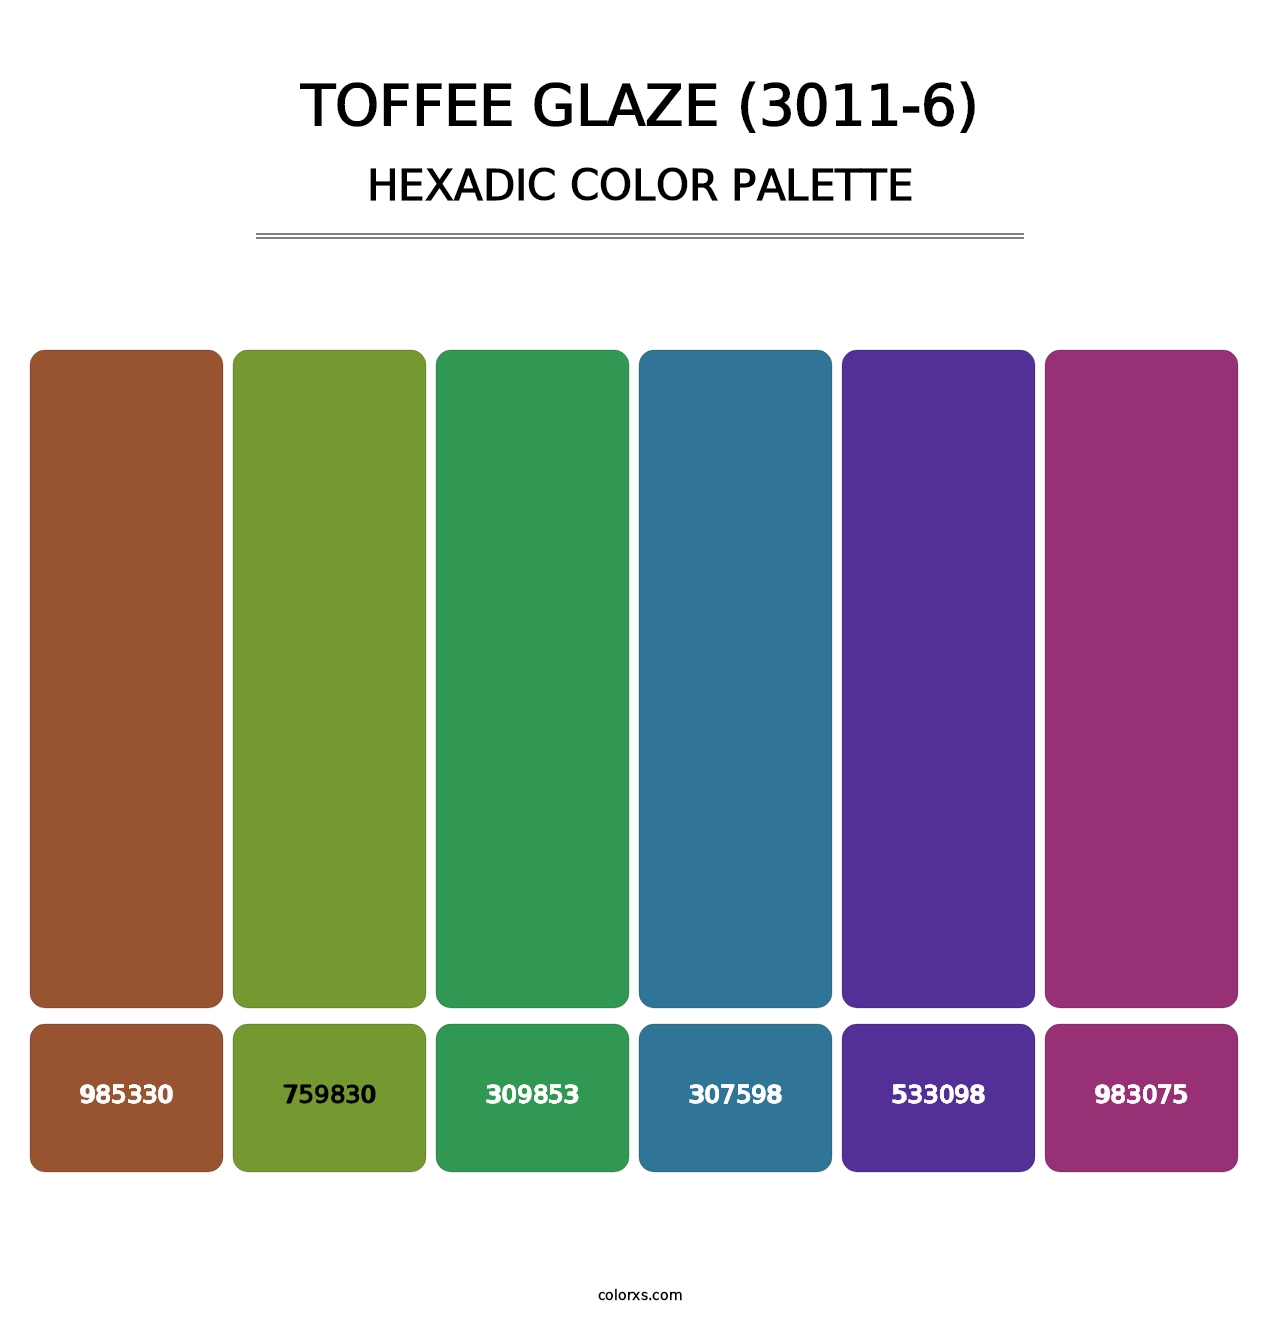 Toffee Glaze (3011-6) - Hexadic Color Palette